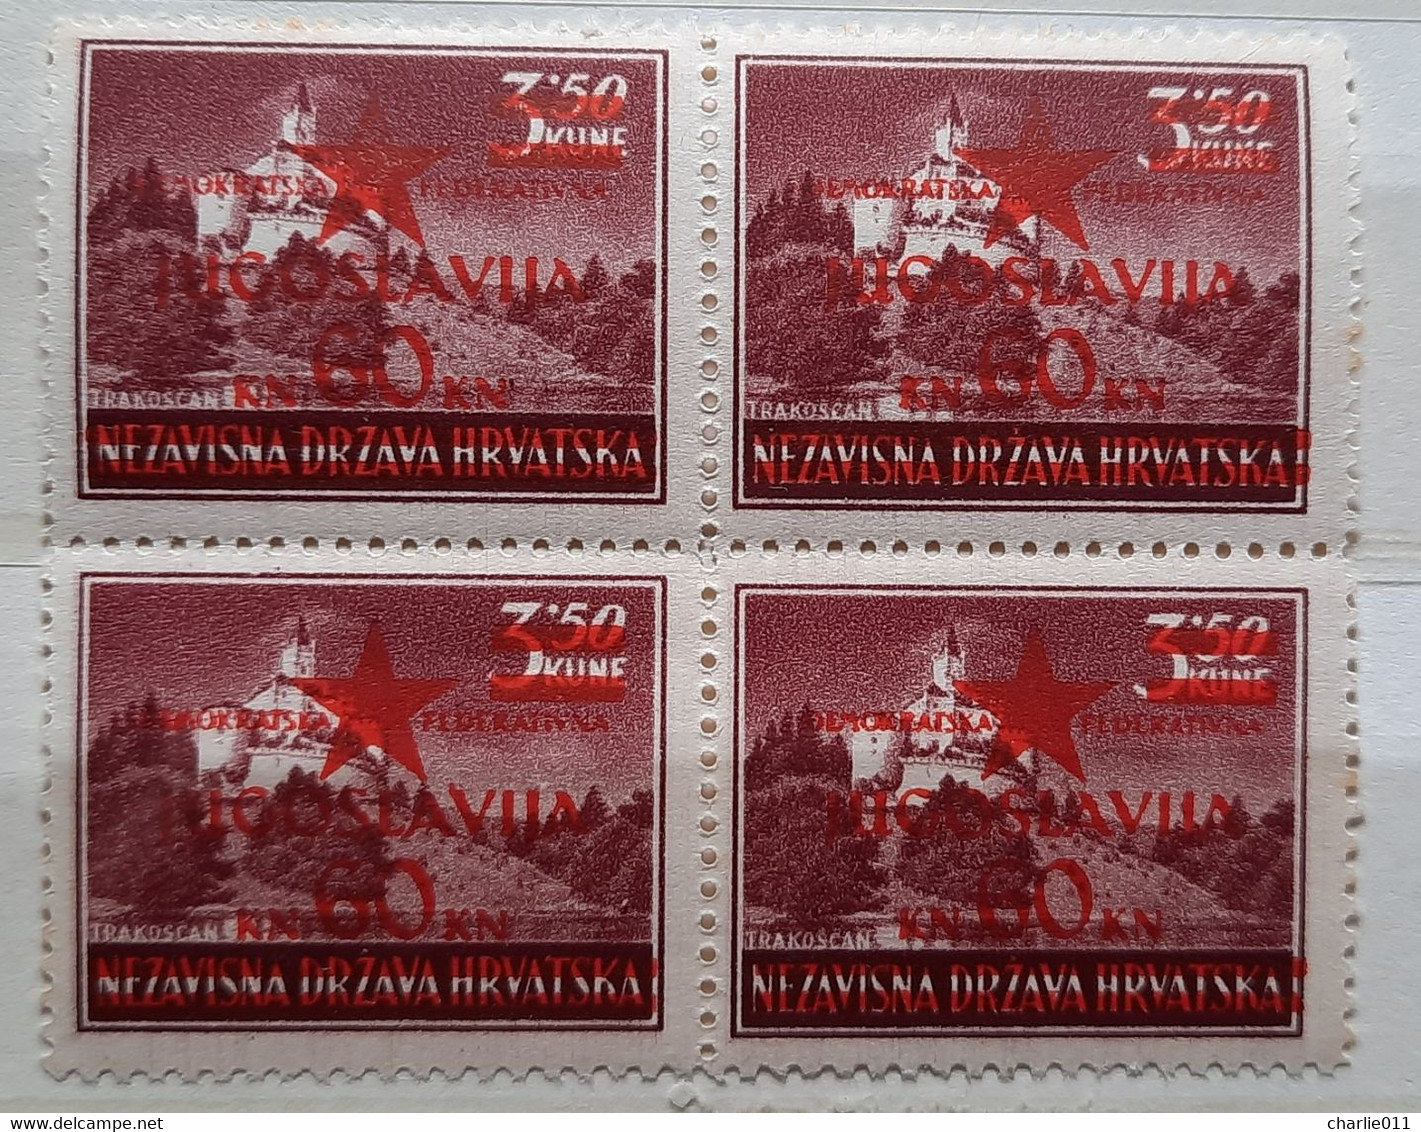 LANDSCAPES-3.50 K-TRAKOŠČAN-BLOCK OF FOUR-OVERPRINT RED STAR-JUGOSLAVIJA-YUGOSLAVIA-NDH-CROATIA-1945 - Croatia